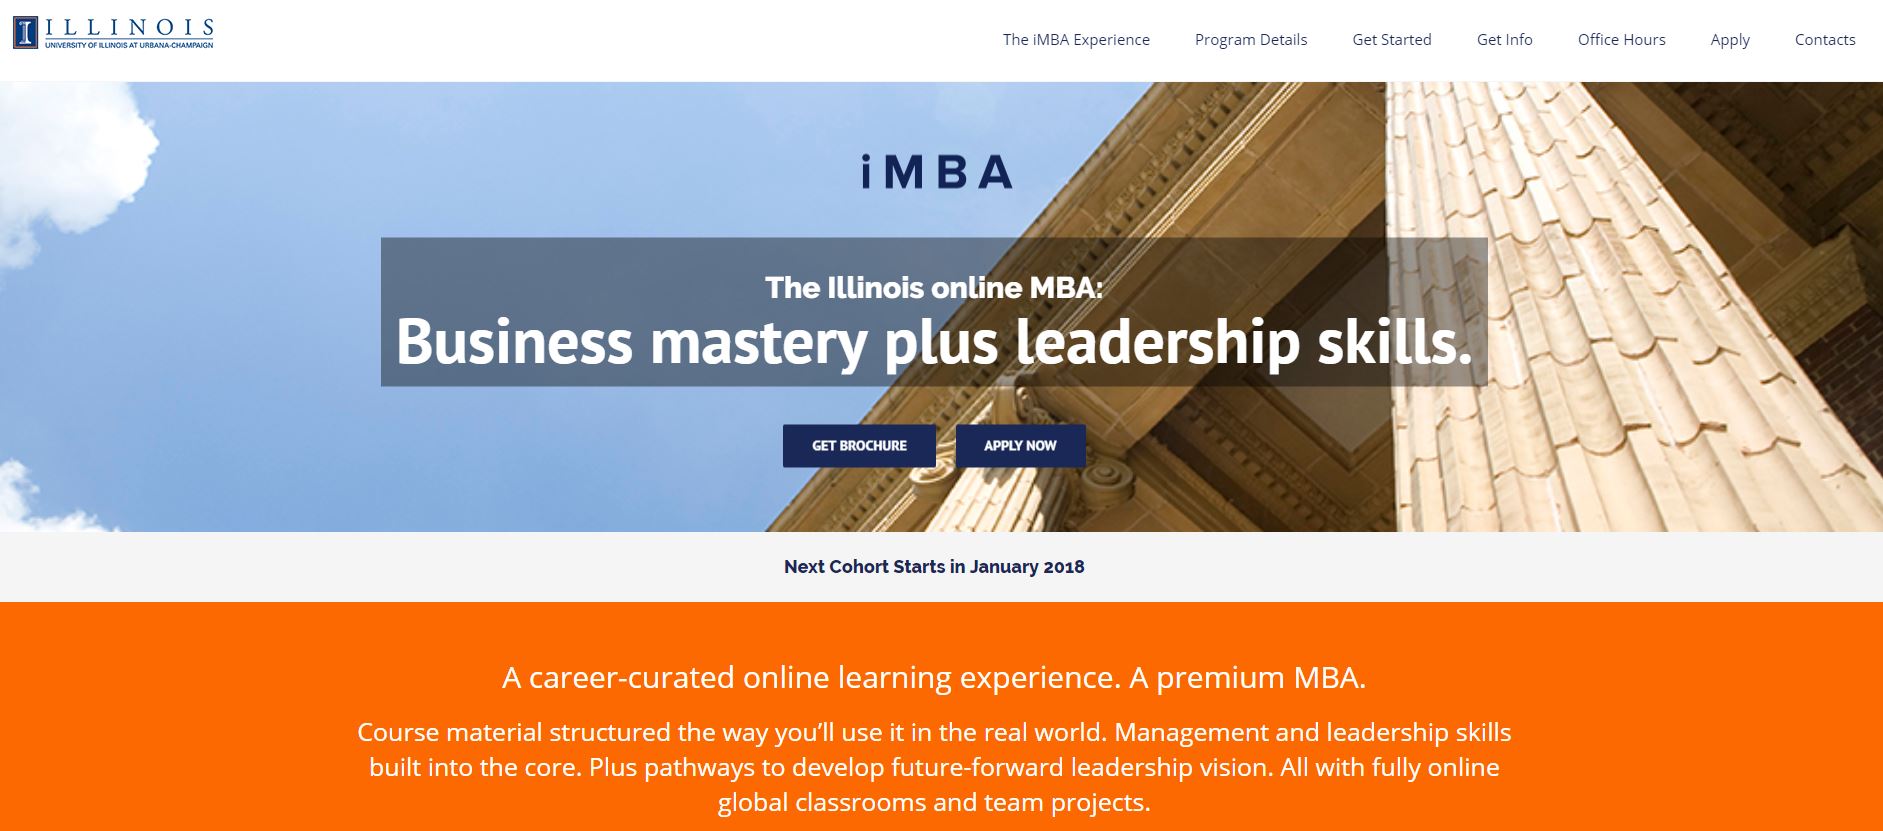 Illinois Online MBA social media marketing